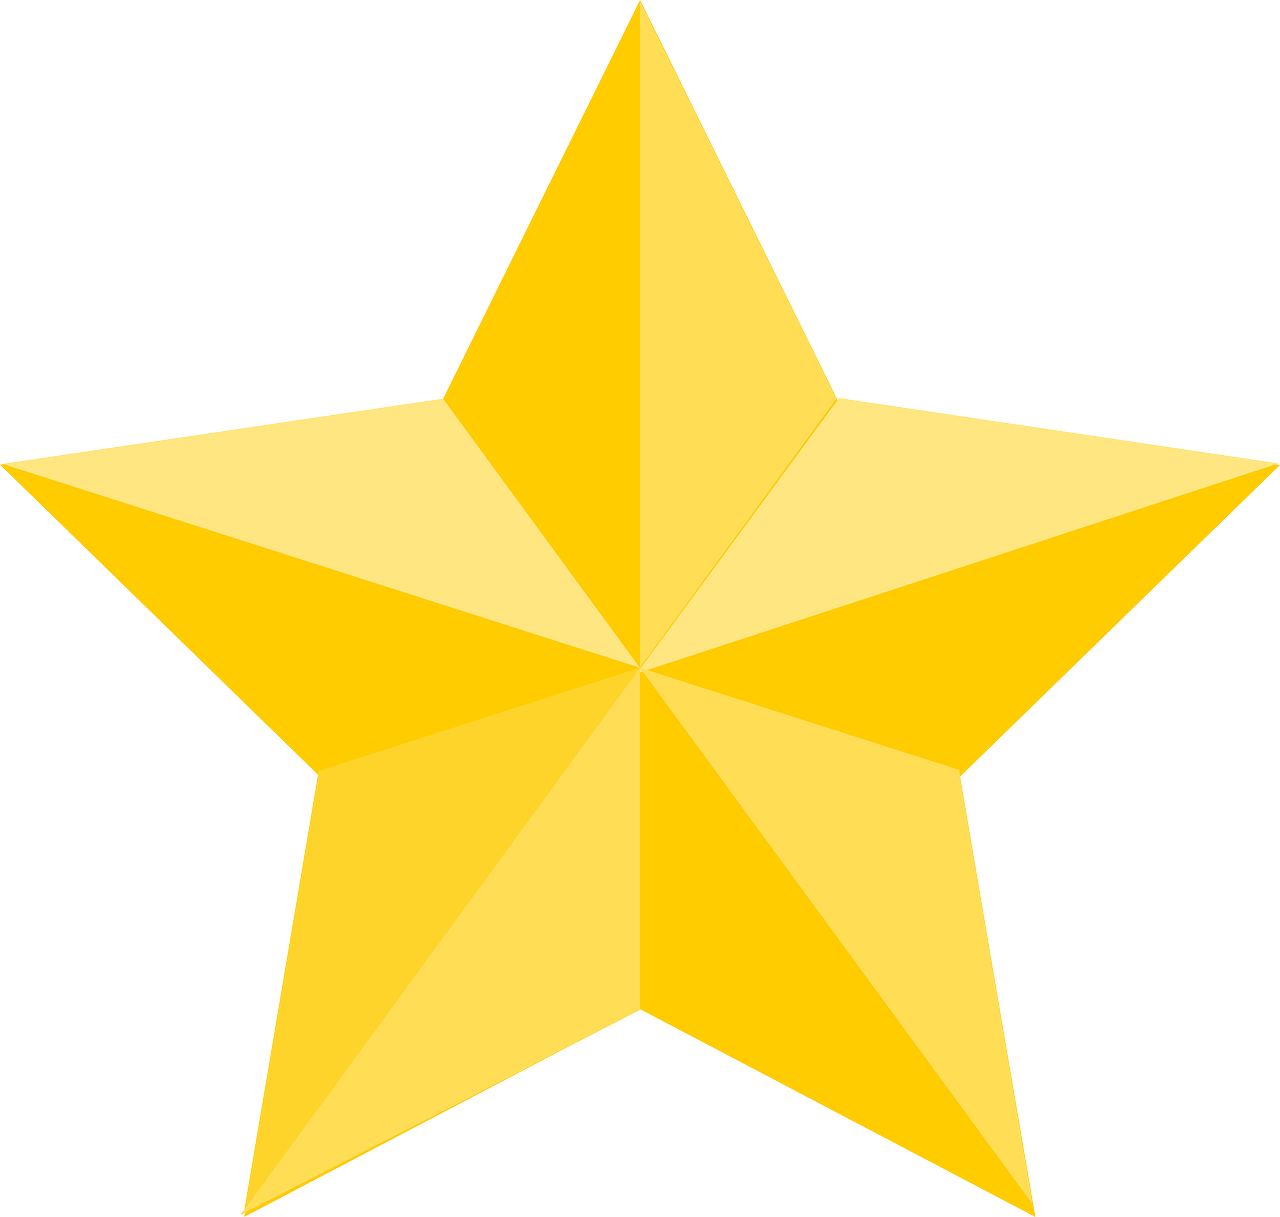 Star Favorite Bookmark 3D Gold